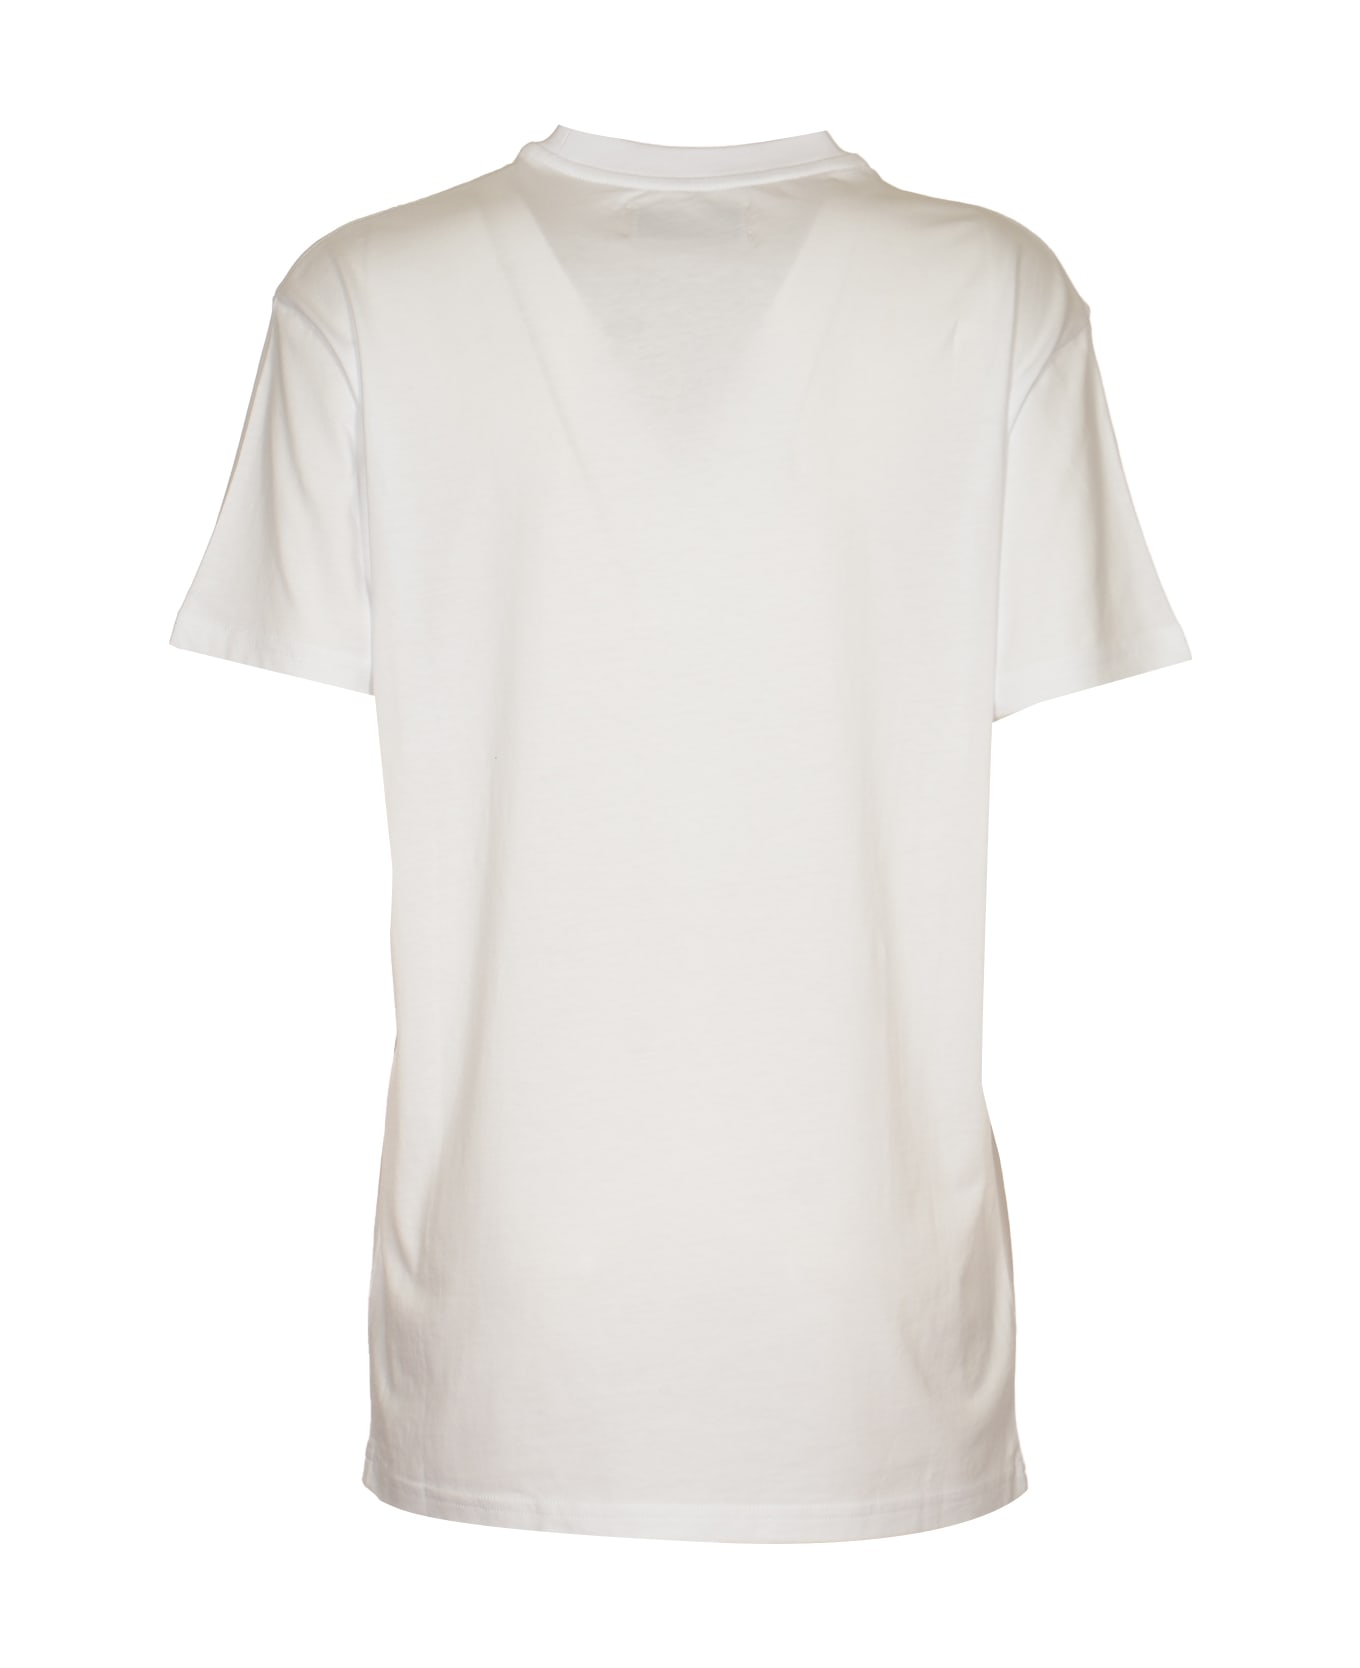 Vivienne Westwood Summer Classic T-shirt - White